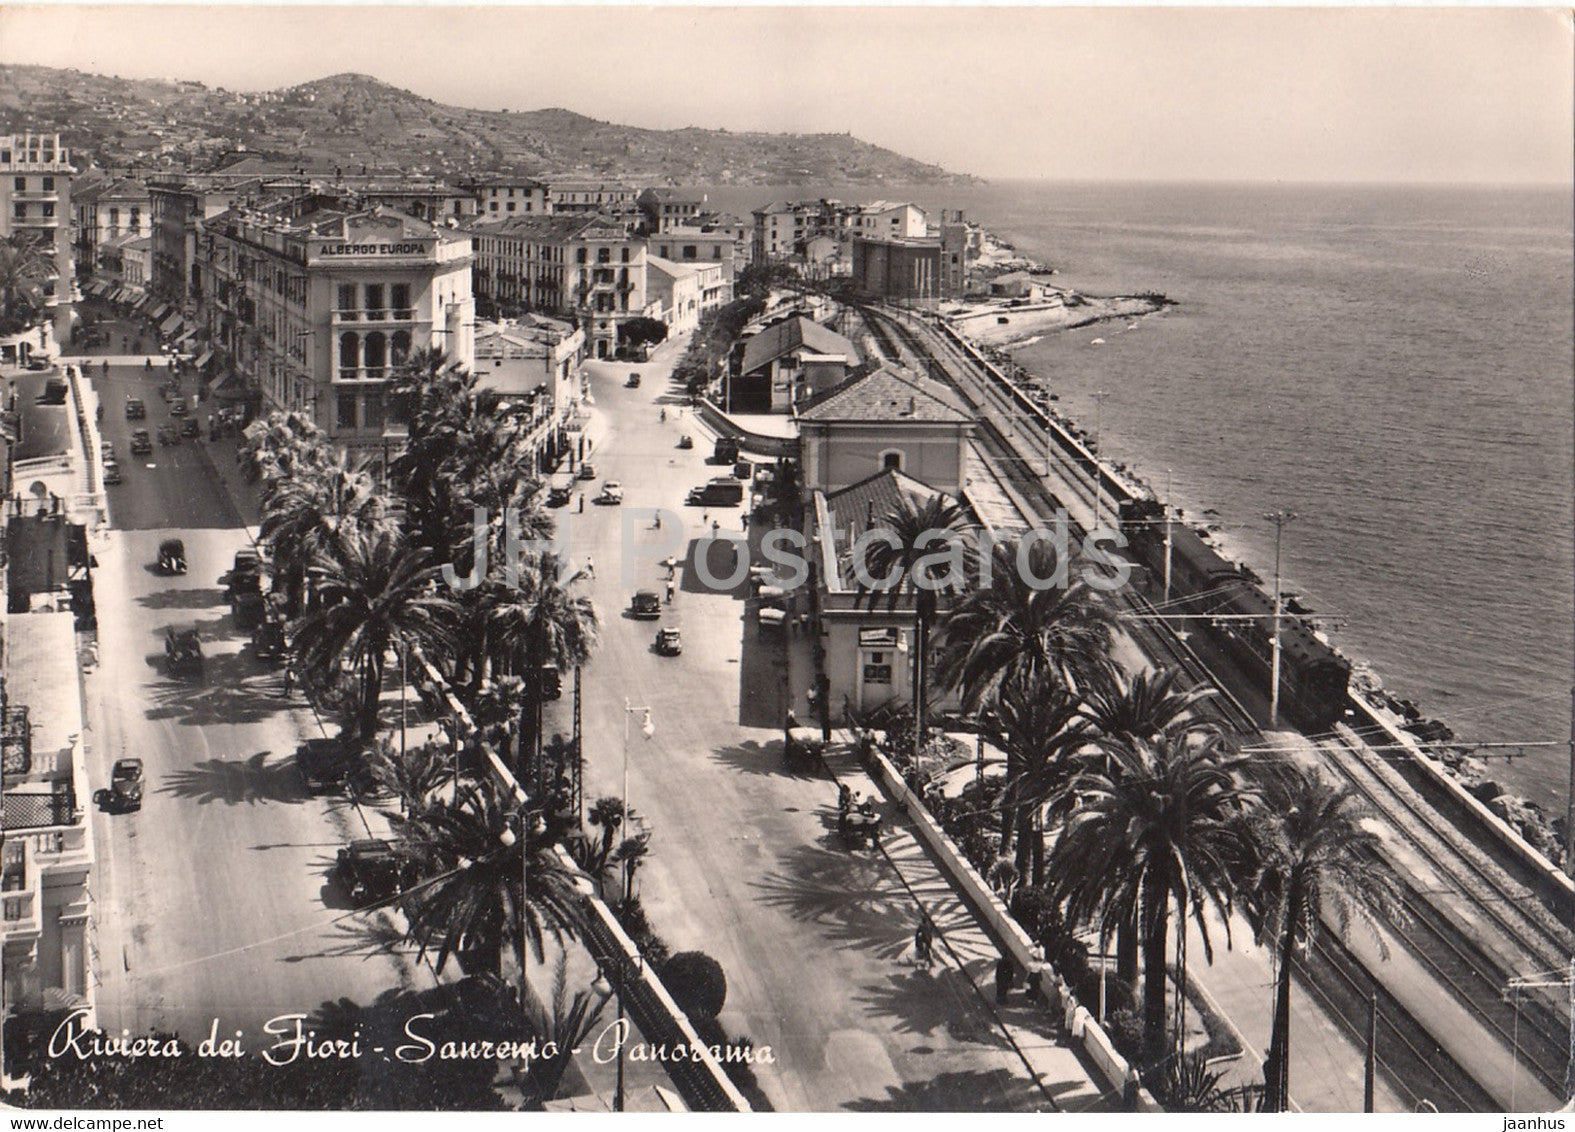 Riviera dei Fiori - Sanremo - Panorama - train - railway - The Flowers Coast - old postcard - 1955 - Italy - used - JH Postcards